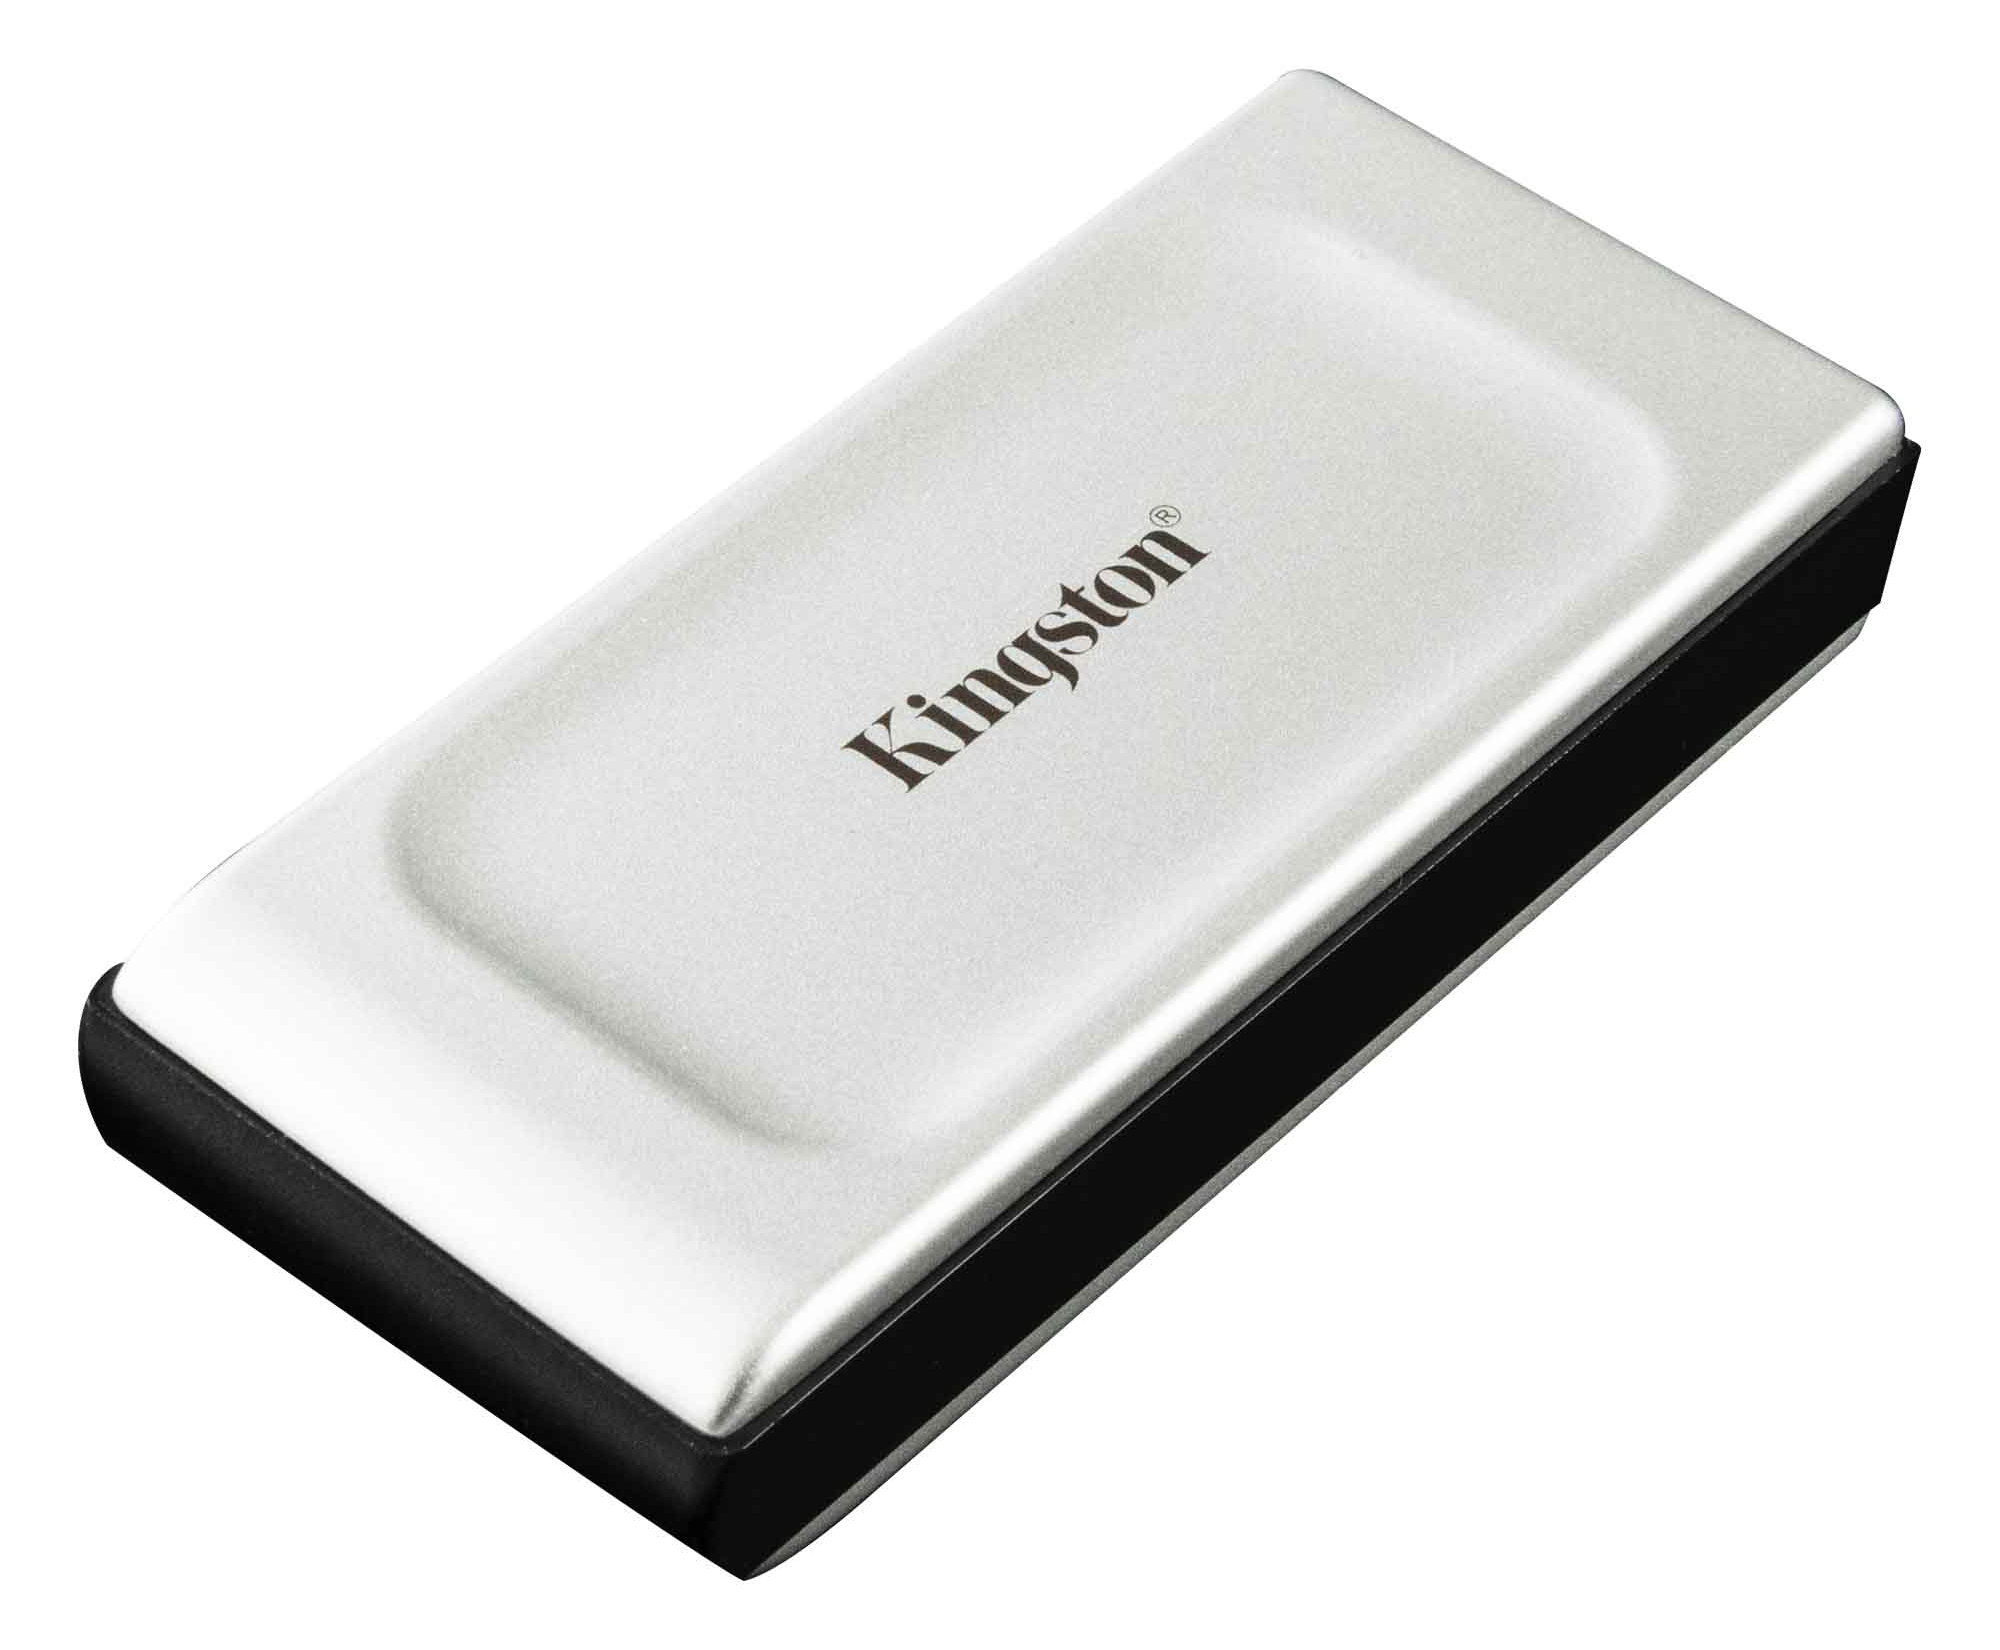 Kingston XS200 USB SSD - Most portable high-capacity drive